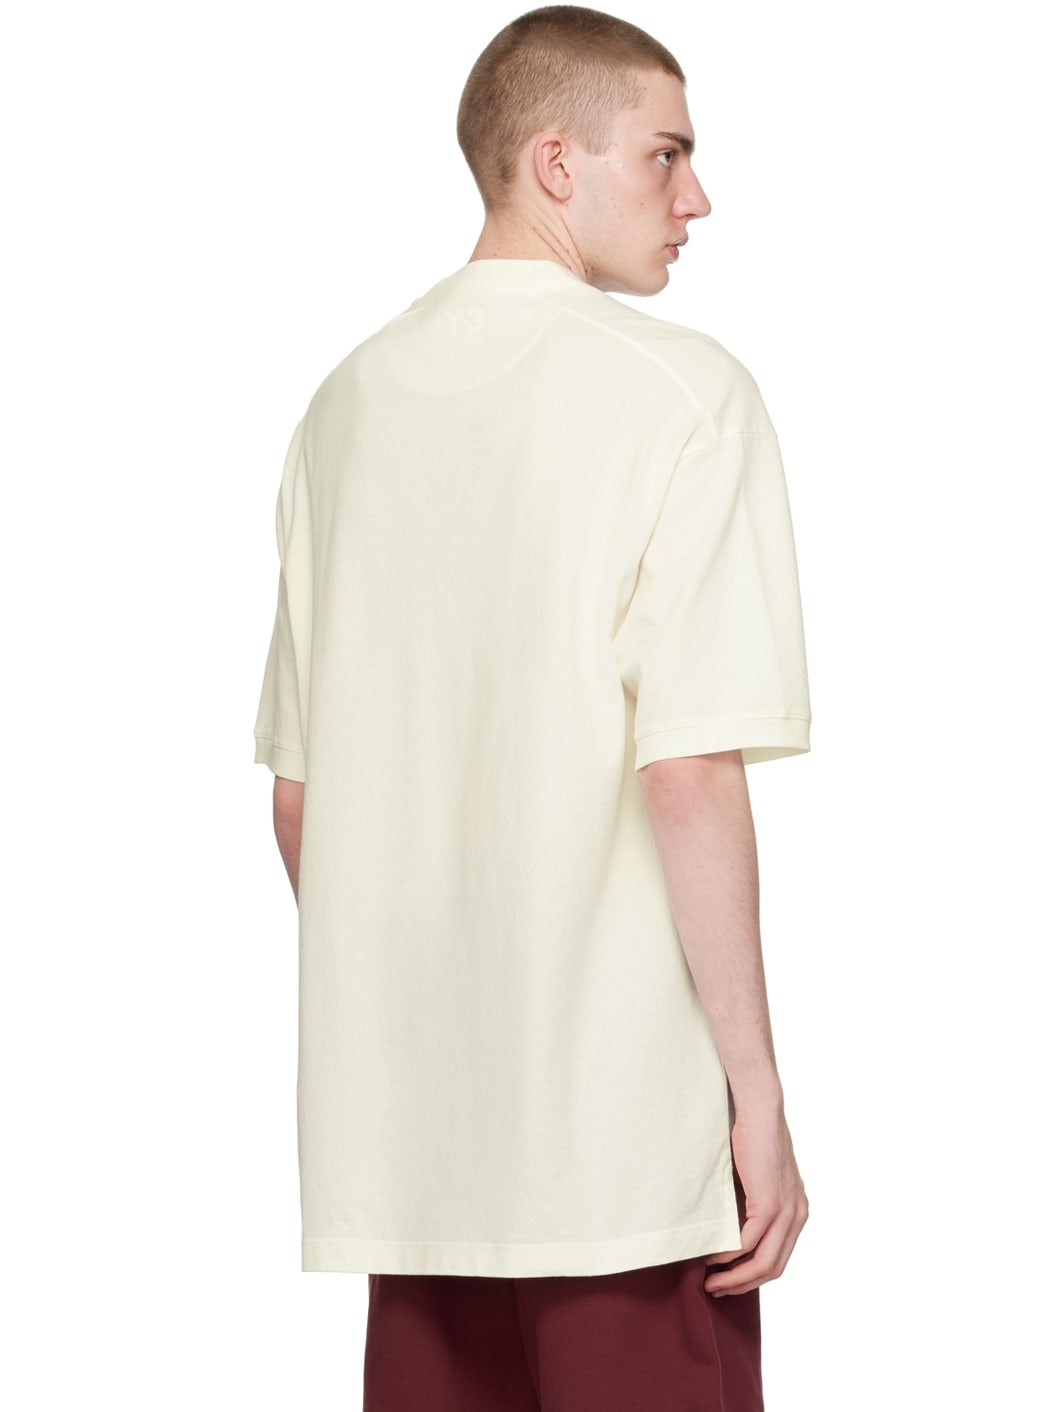 Off-White Workwear T-Shirt - 3